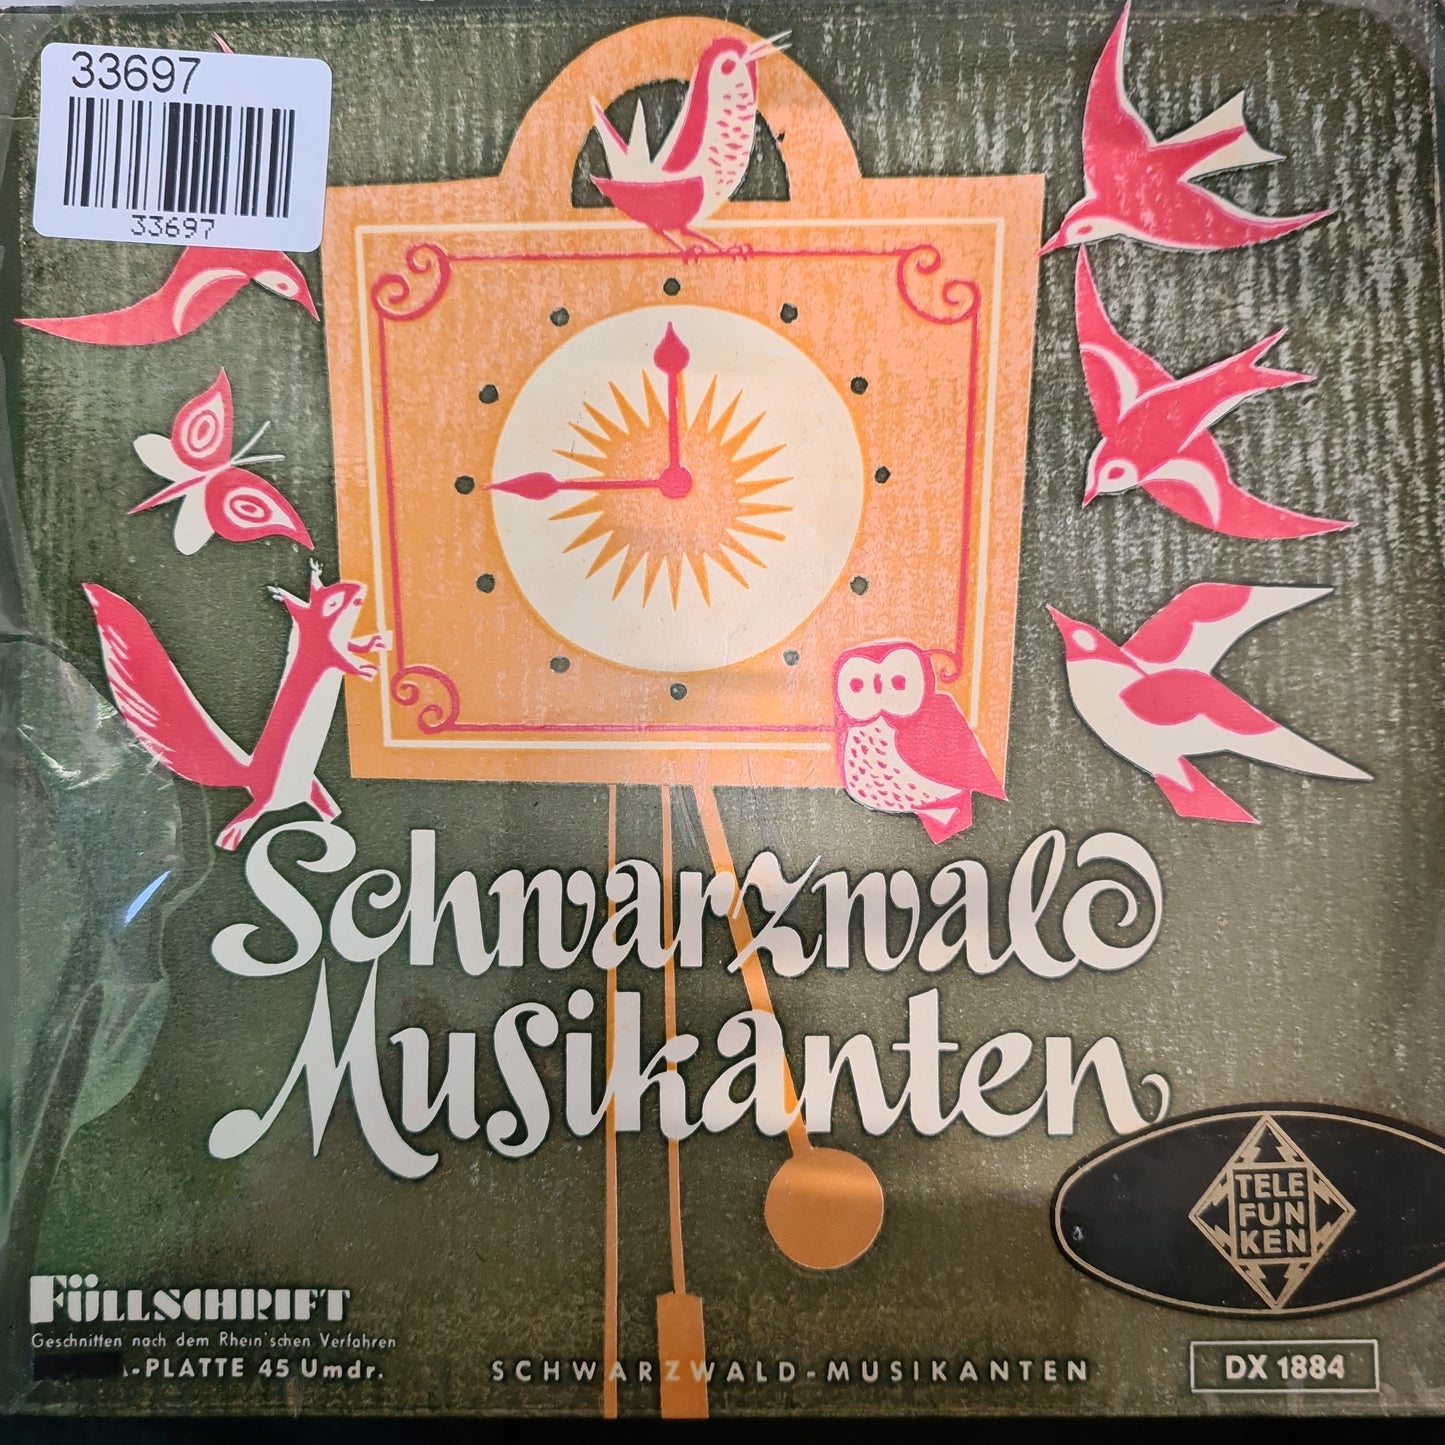 Schwarzwald Musikanten - Schwarzwalder Kirsch Polka (EP) 33697 Vinyl Singles EP VINYLSINGLES.NL